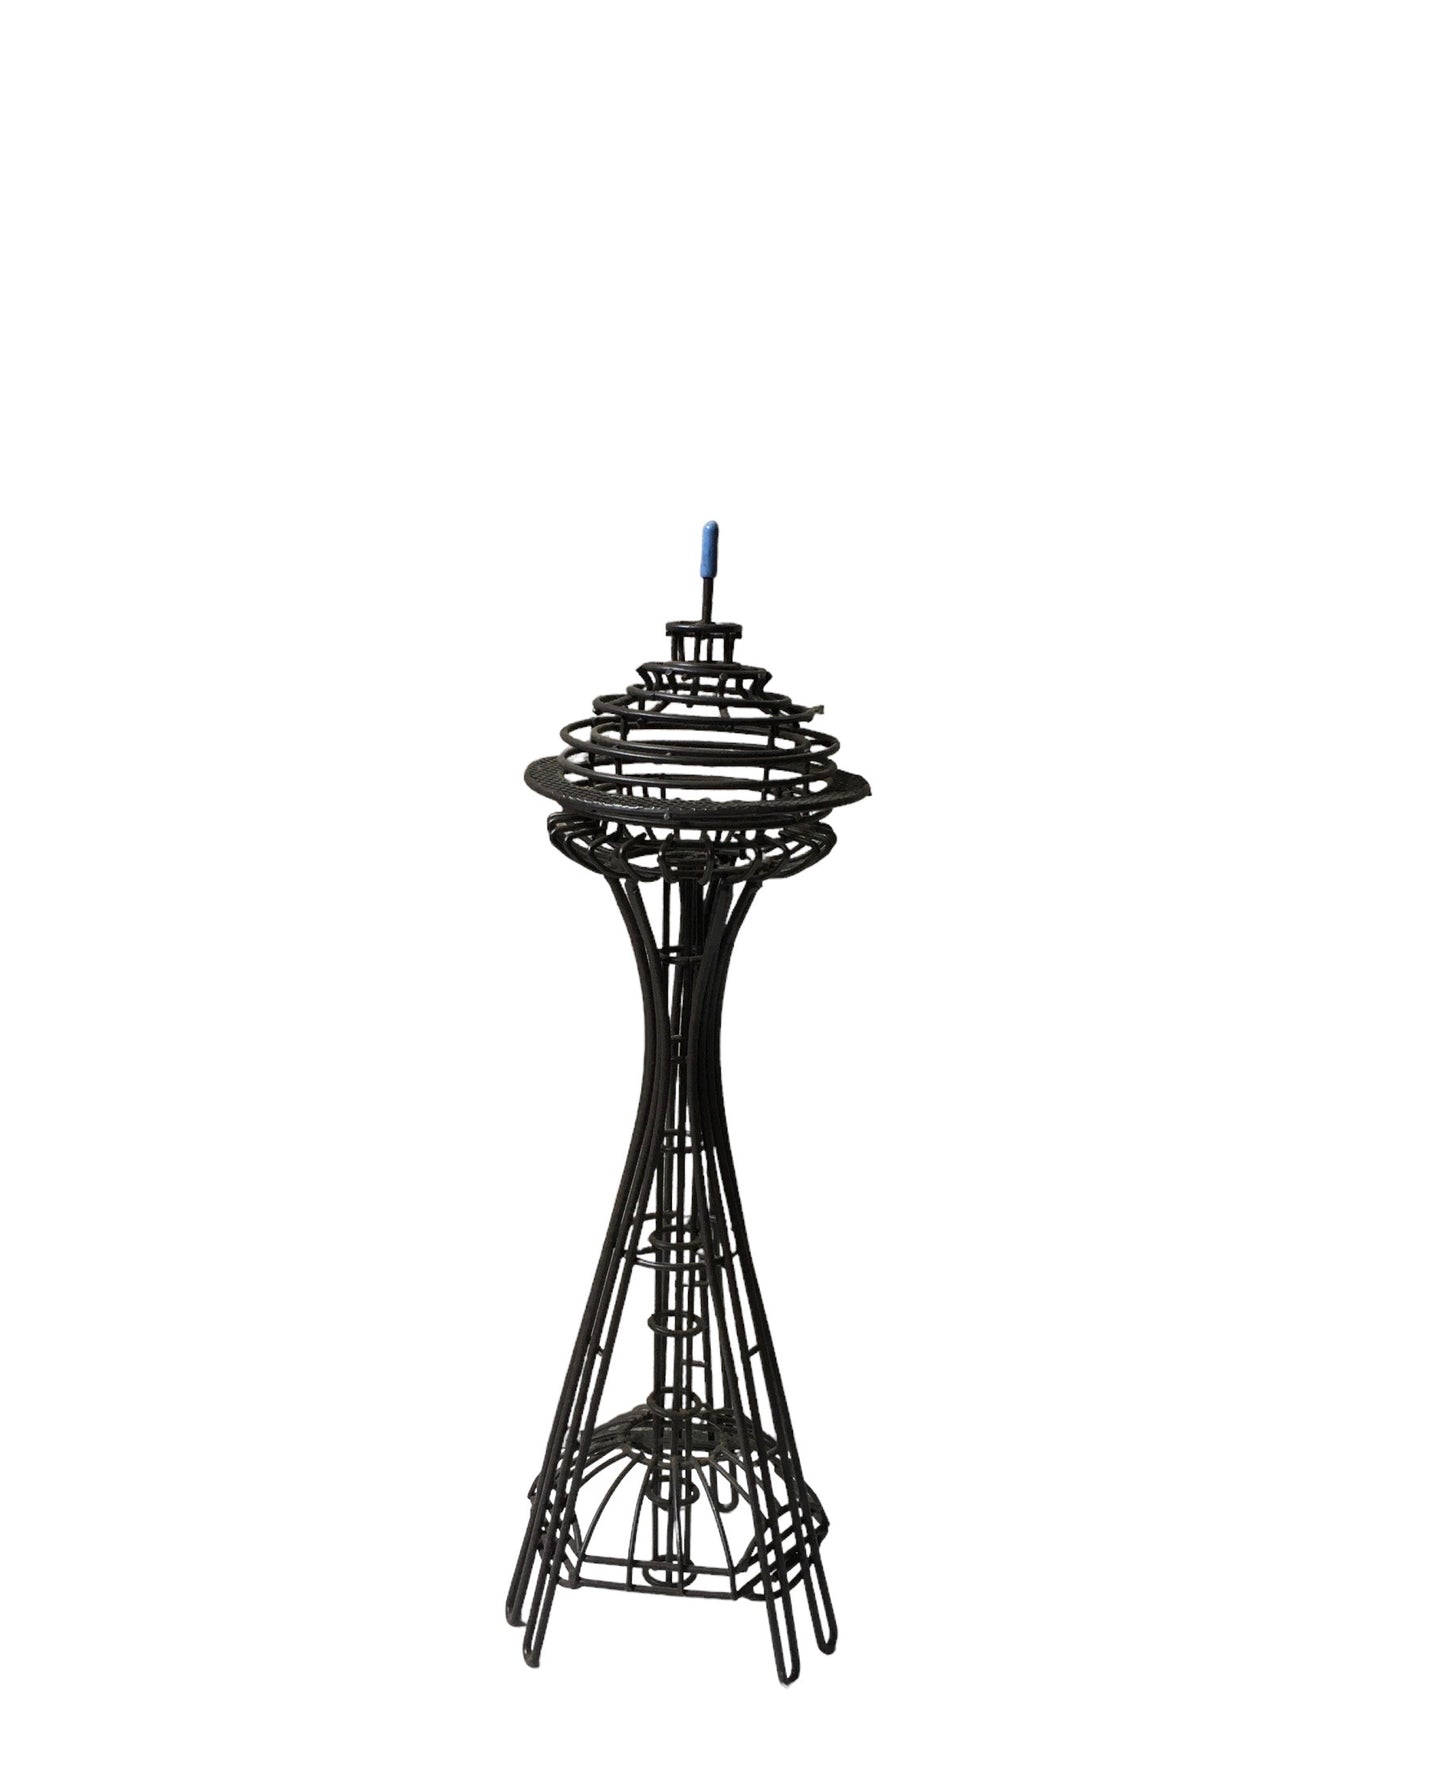 Seattle Space needle